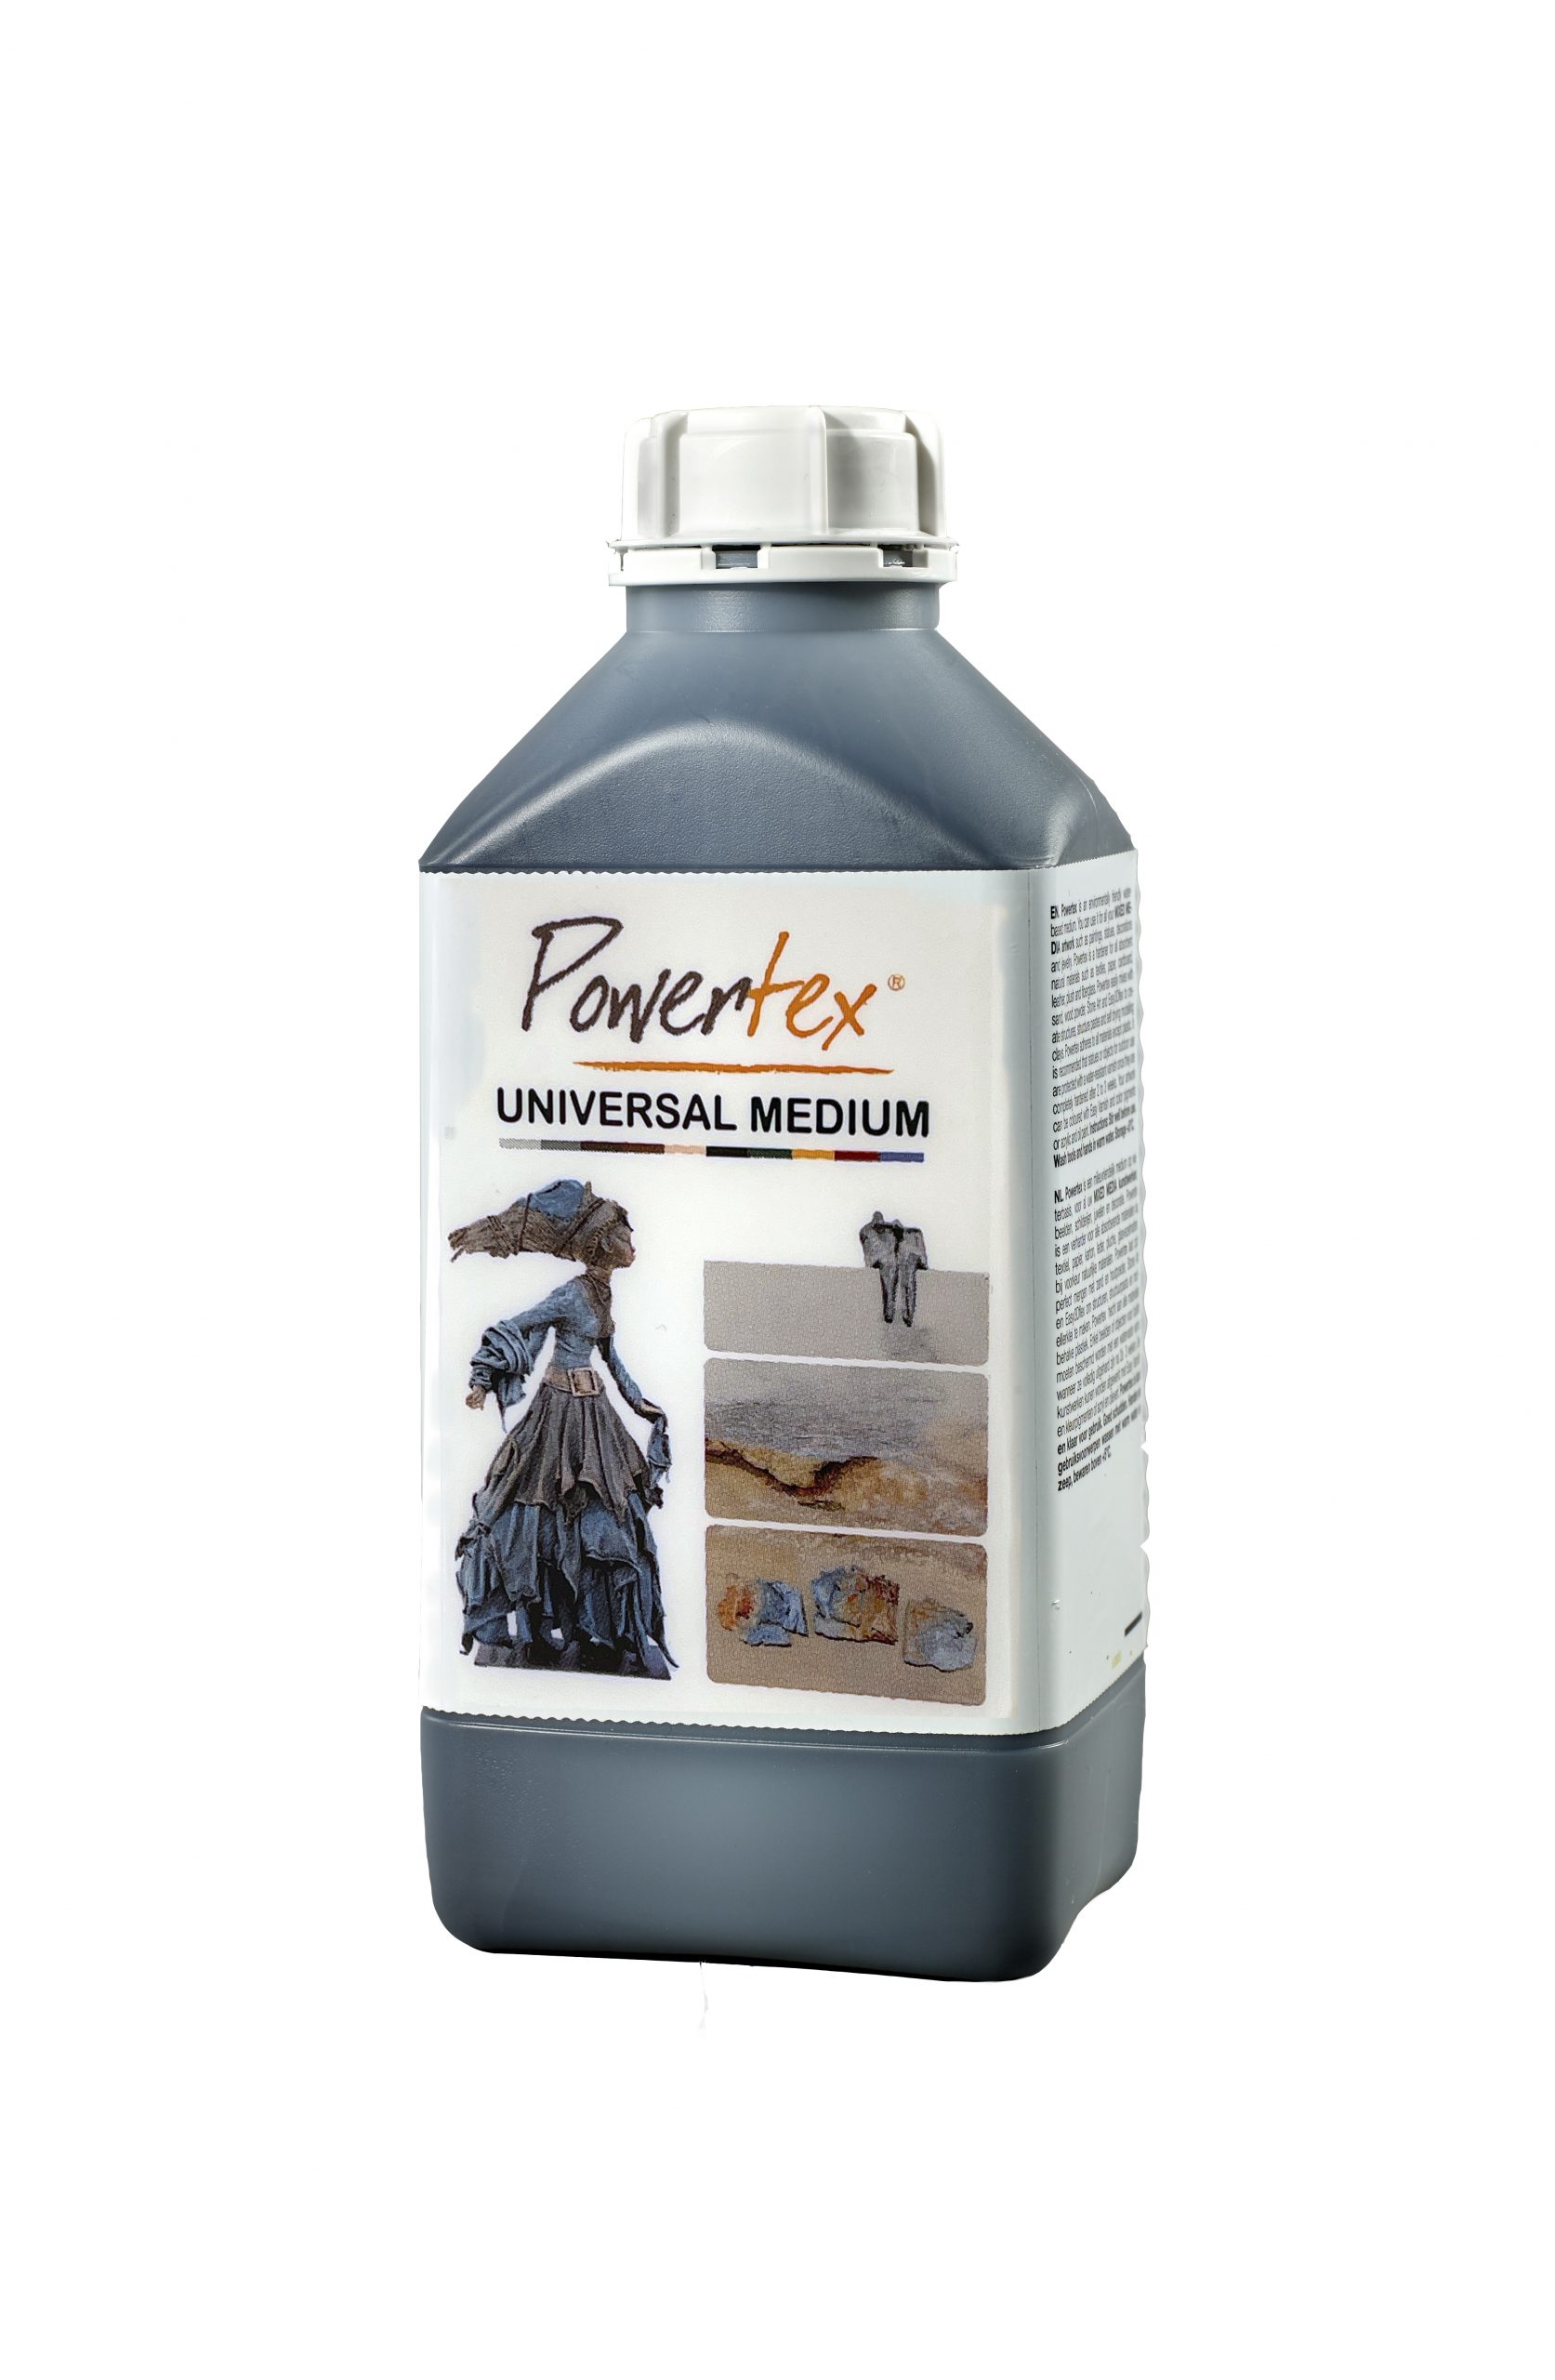 Powertex Universal Medium Ivory 500g (0.5 Liter) – Powertex Products USA